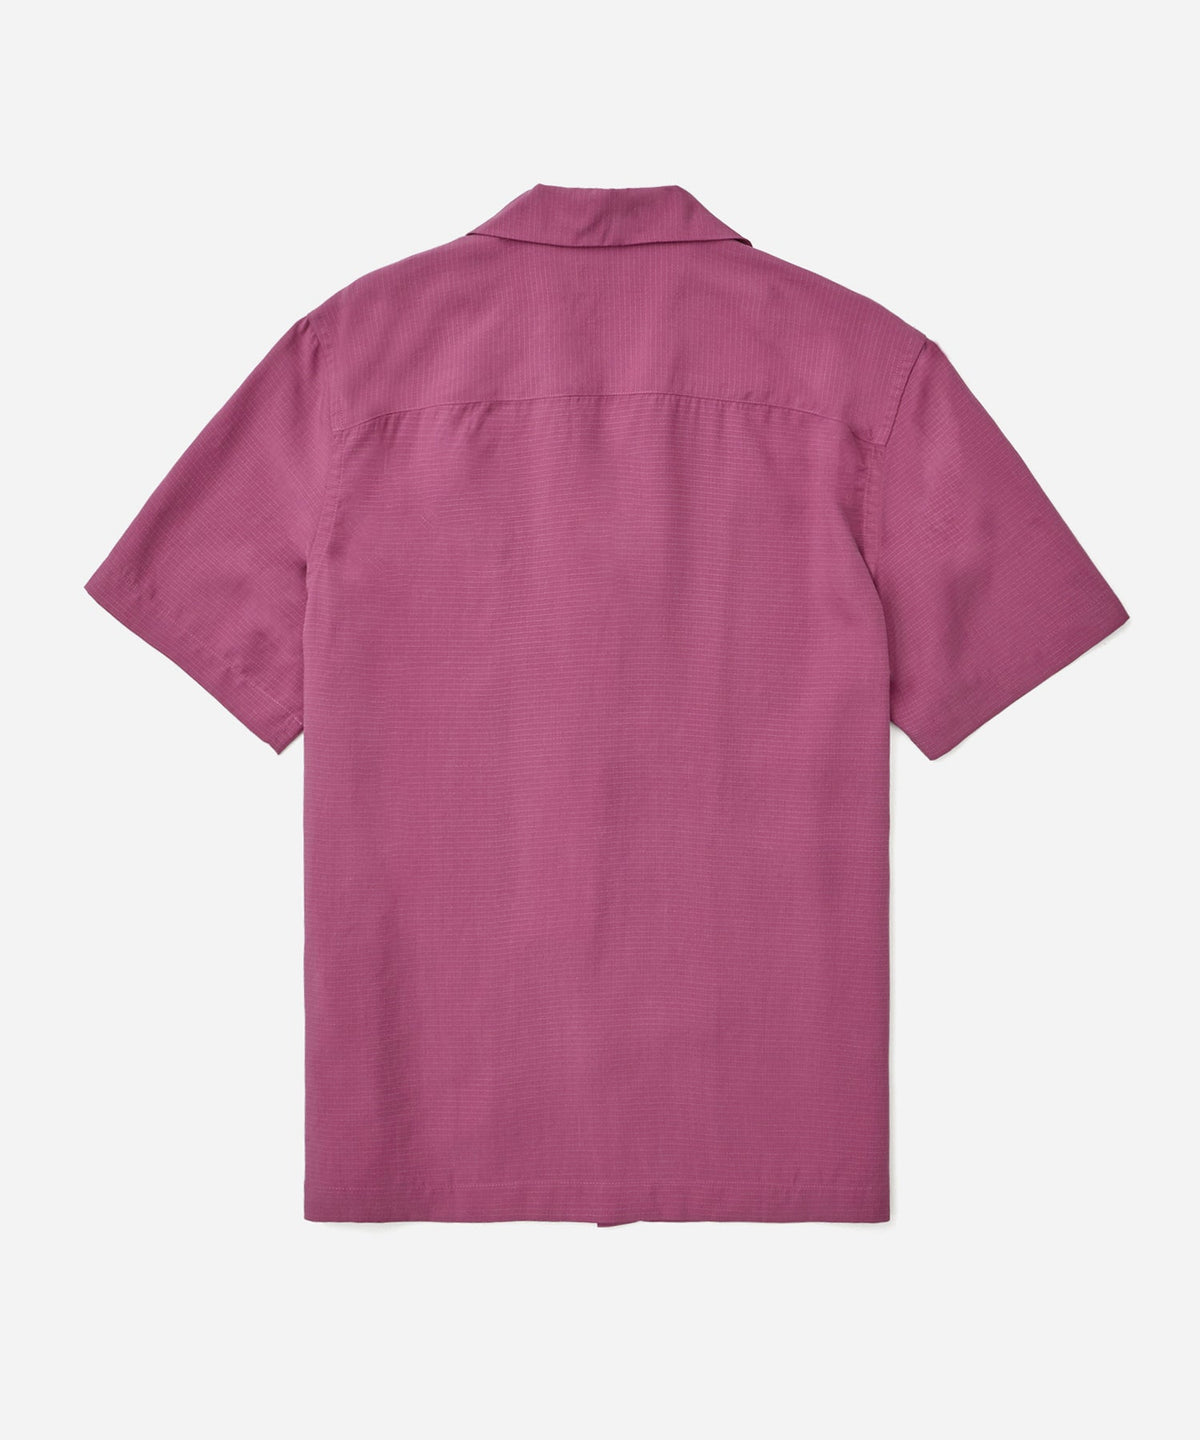 York Ripstop Short Sleeve Shirt in Violet Quartz